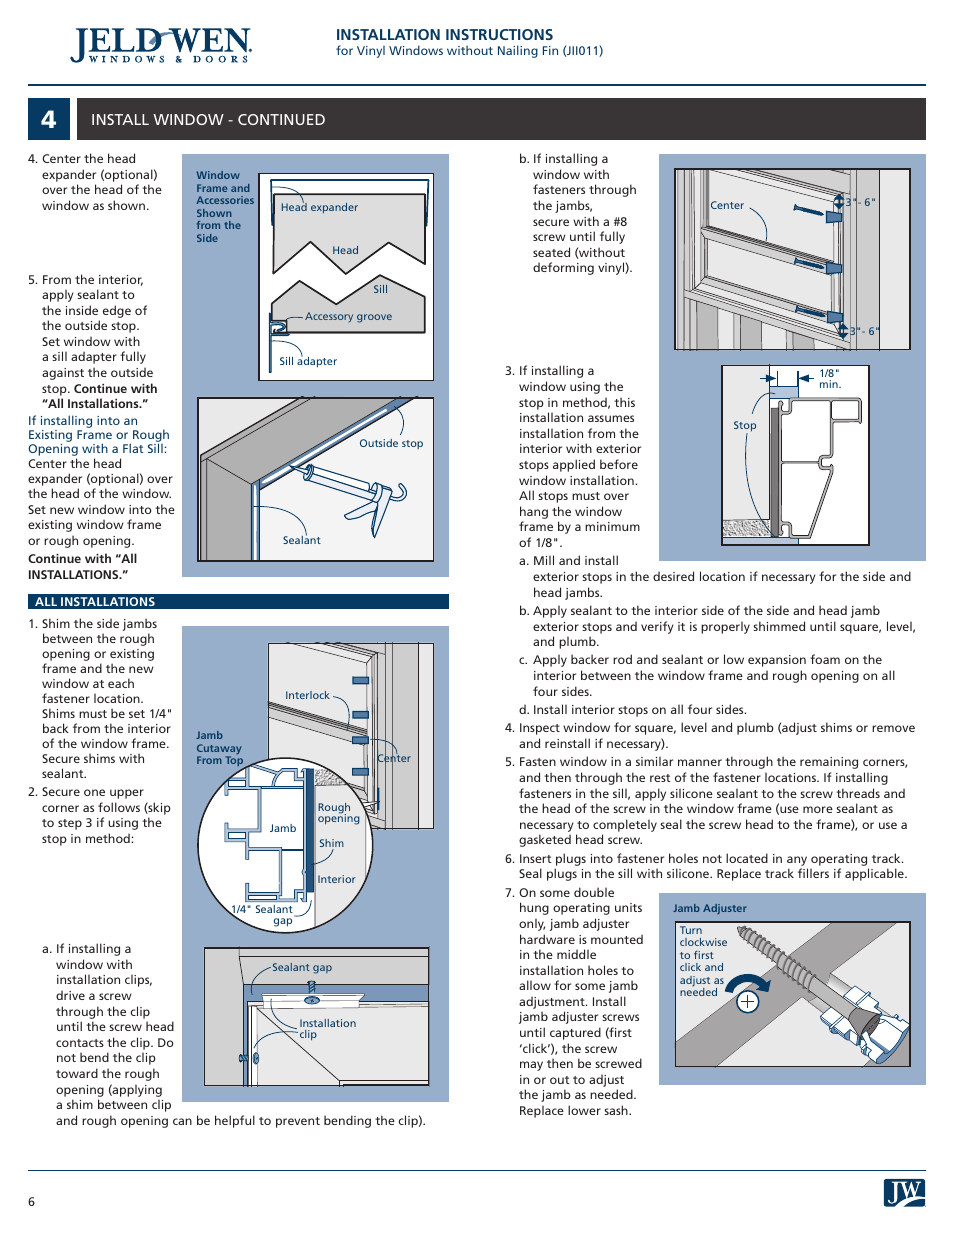 Installation instructions, Install window - continued | JELD-WEN JII011